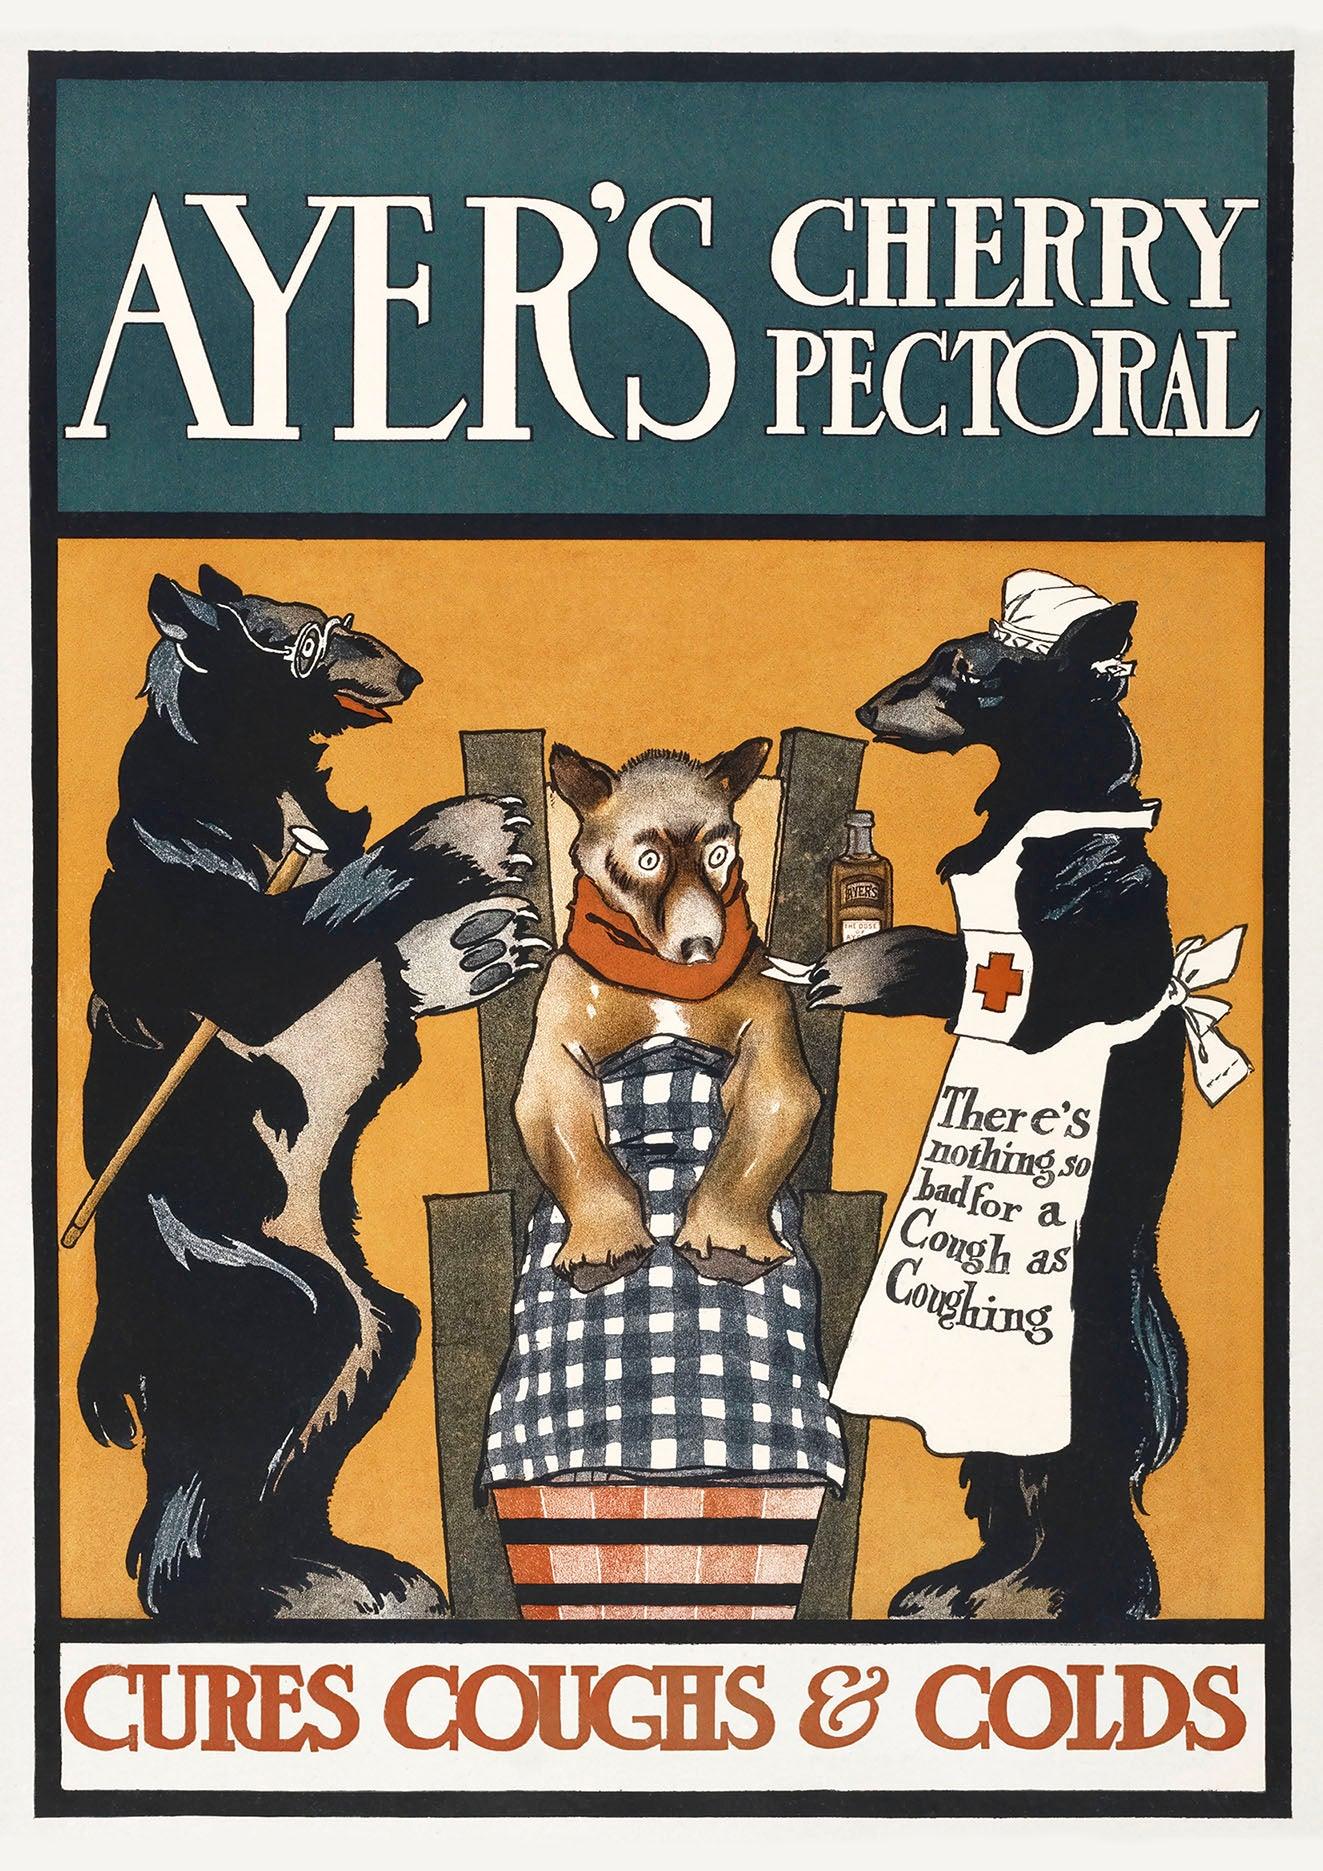 COUGH MEDICINE POSTER: Vintage Ayer's Cherry Pectoral Advert Art Print - Pimlico Prints